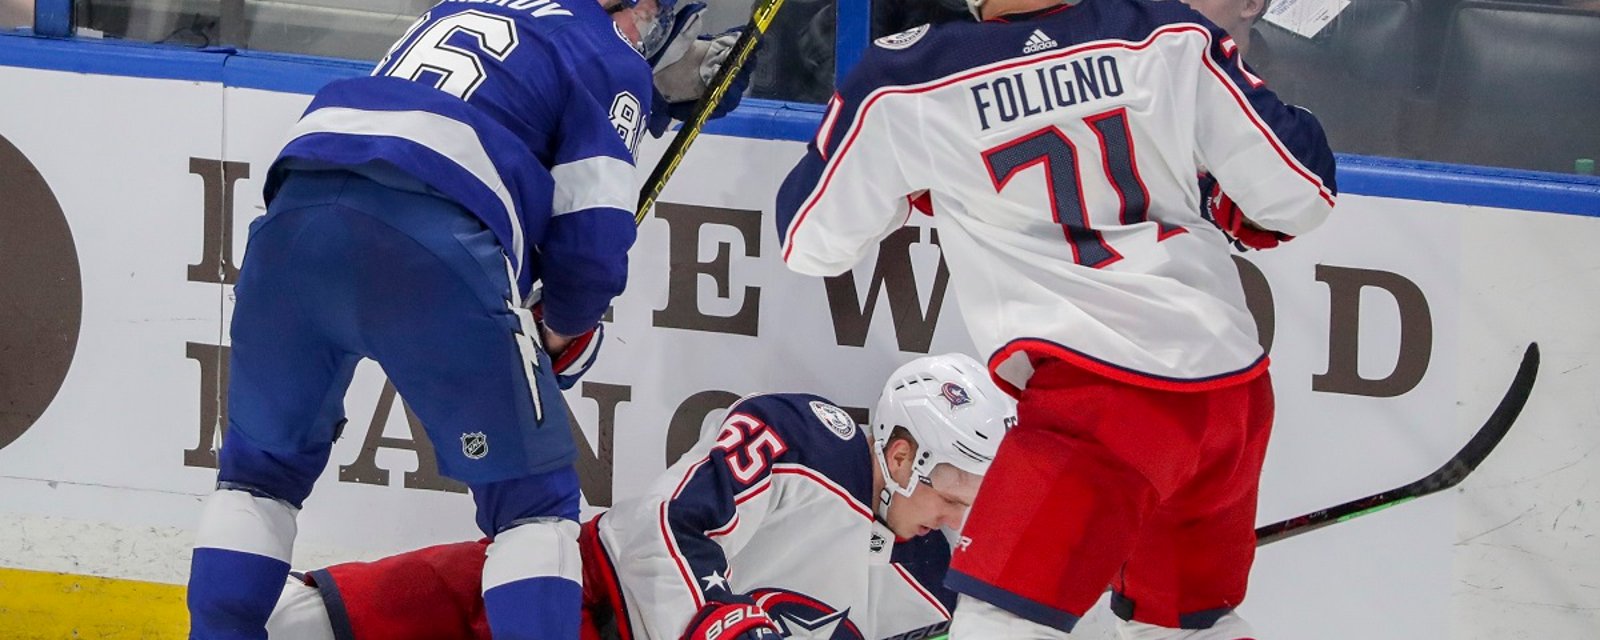 Breaking: Nikita Kucherov has been suspended by the NHL.